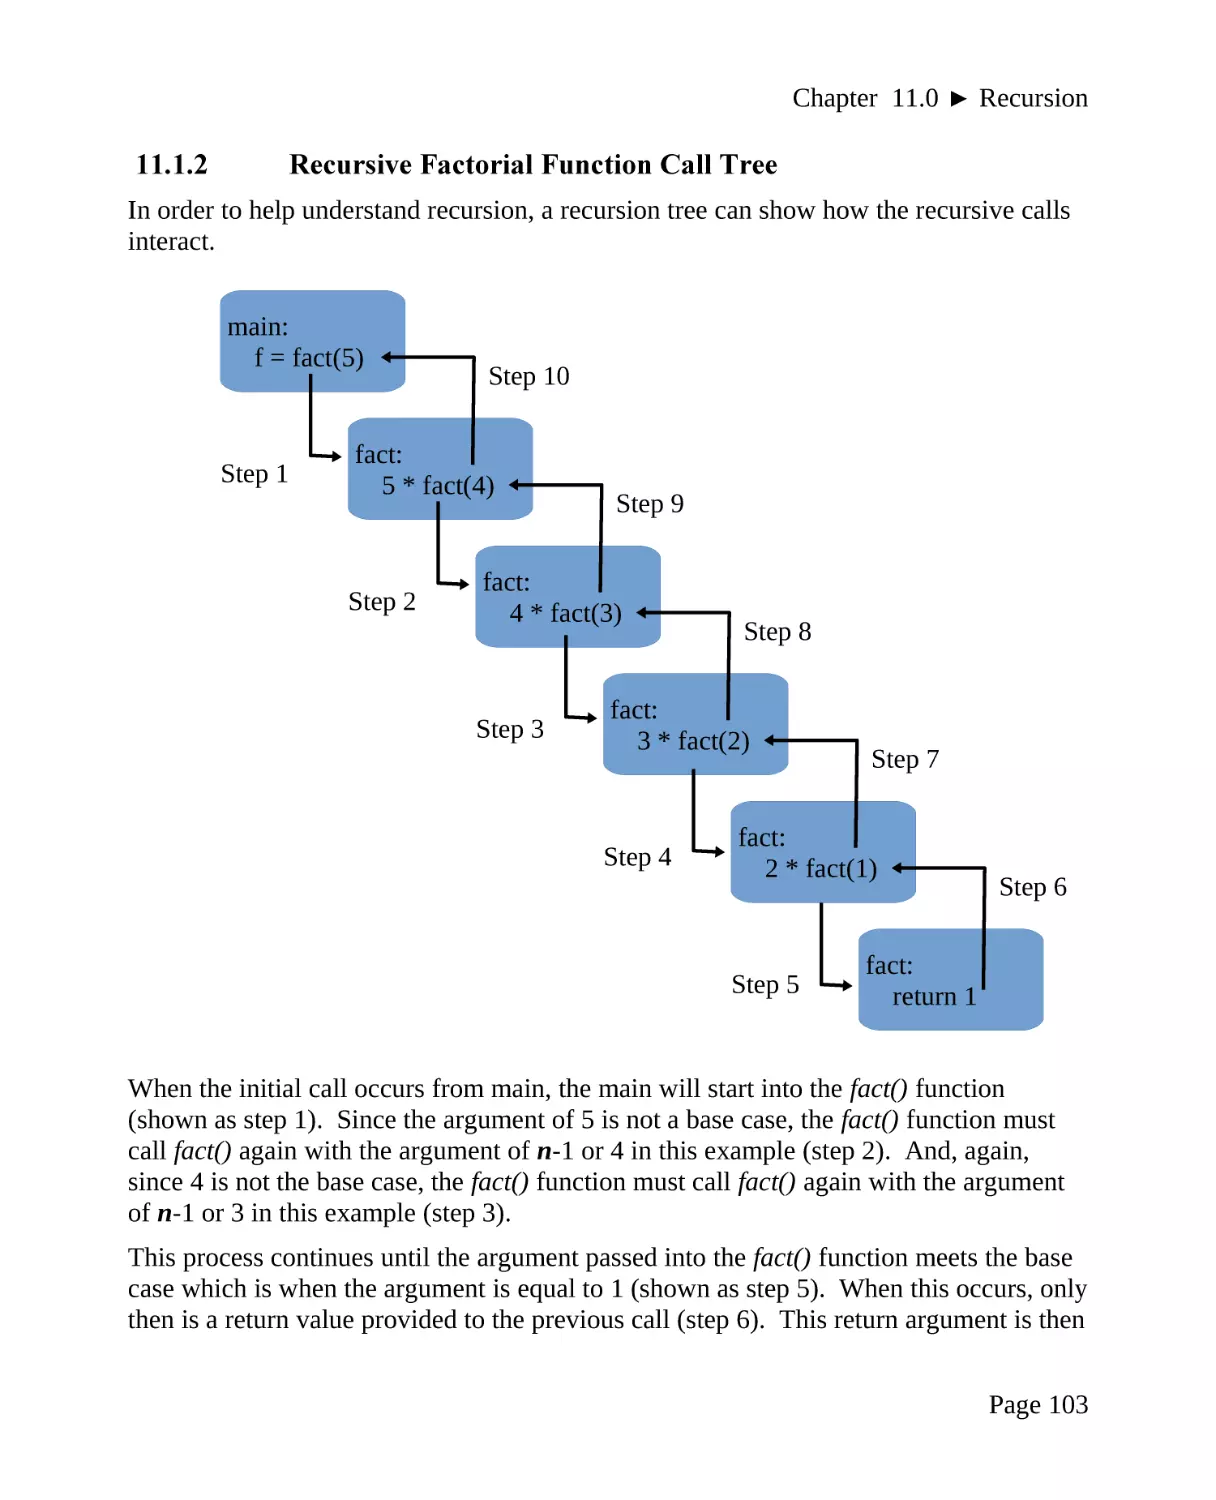 11.1.2 Recursive Factorial Function Call Tree